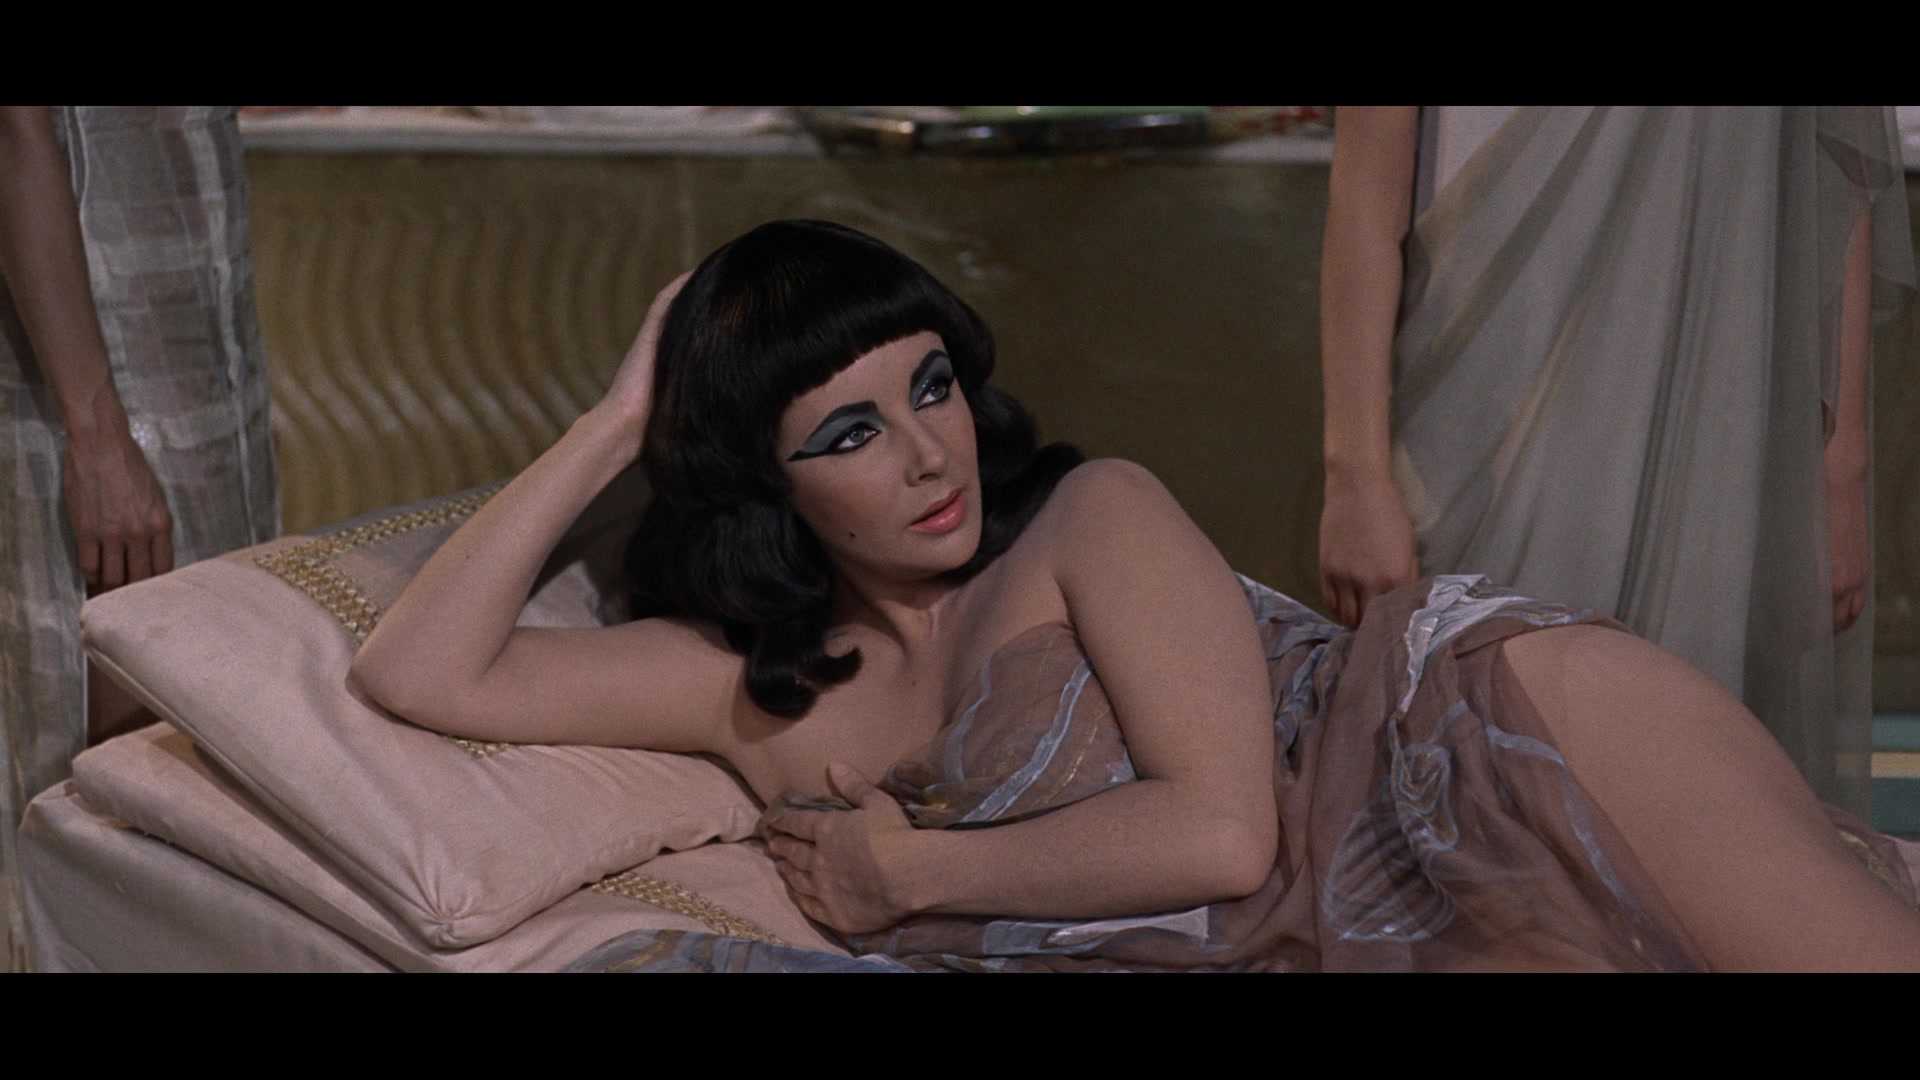 Cleopatra (Elizabeth Taylor) awakens from a nap in Cleopatra (1963), 20th Century Studios